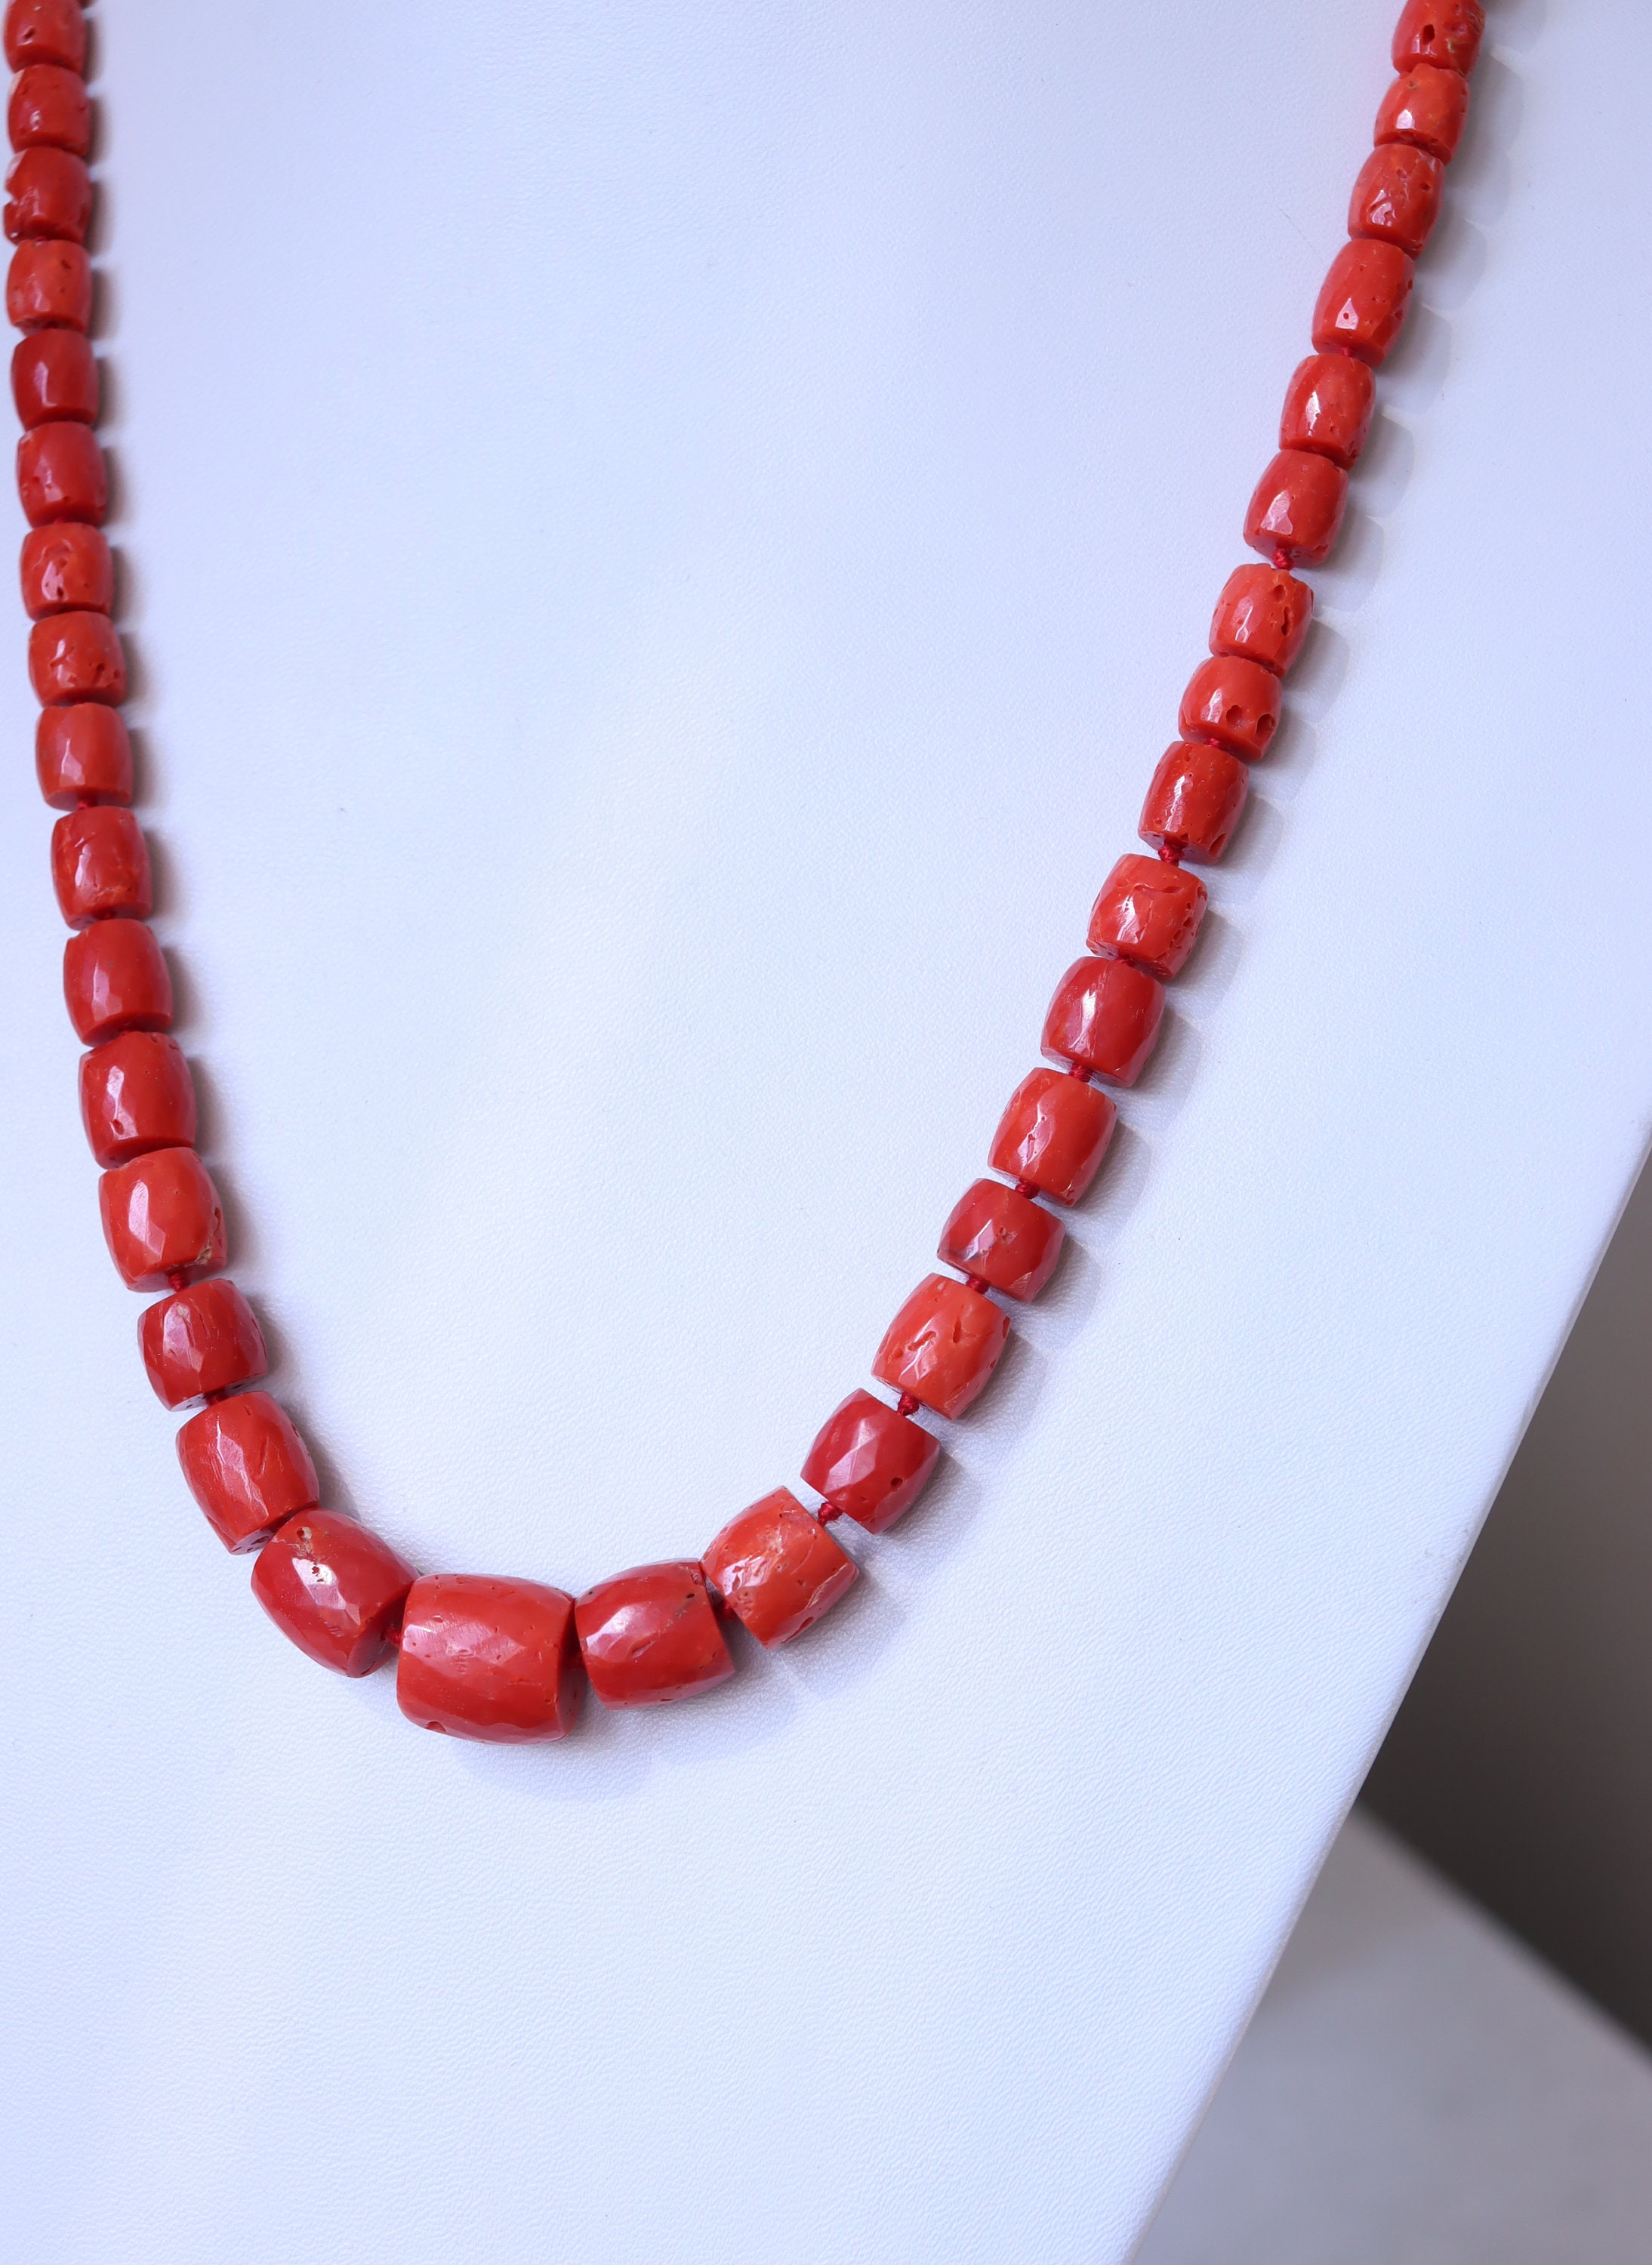 Red Coral Beads, 2.5mm 3mm 4mm 6mm 8mm 10mm 12mm Round Coral Beads